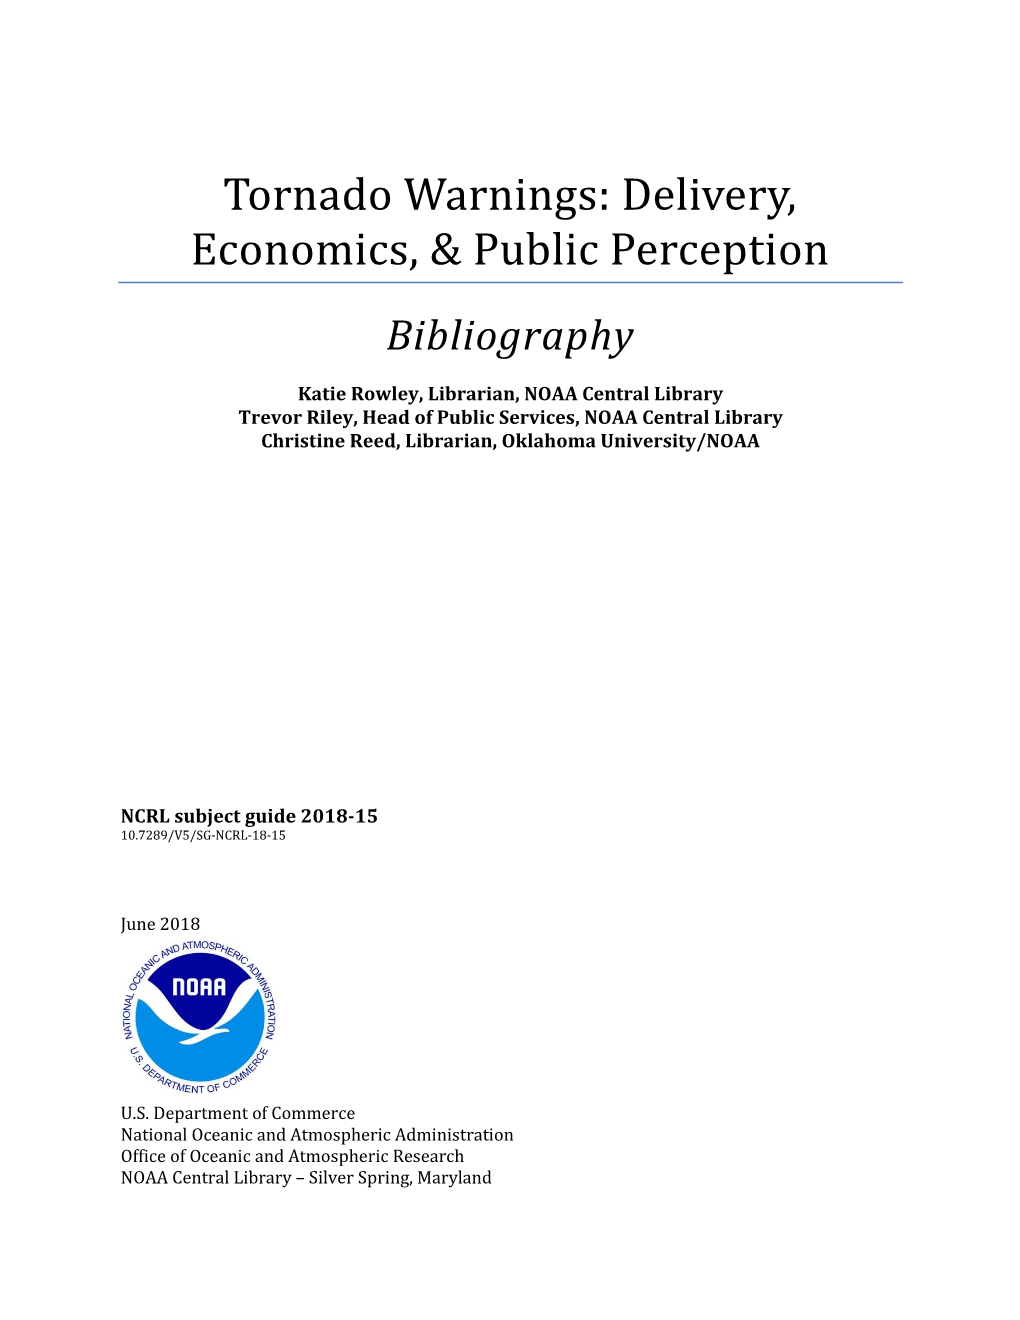 Tornado Warnings: Delivery, Economics, & Public Perception